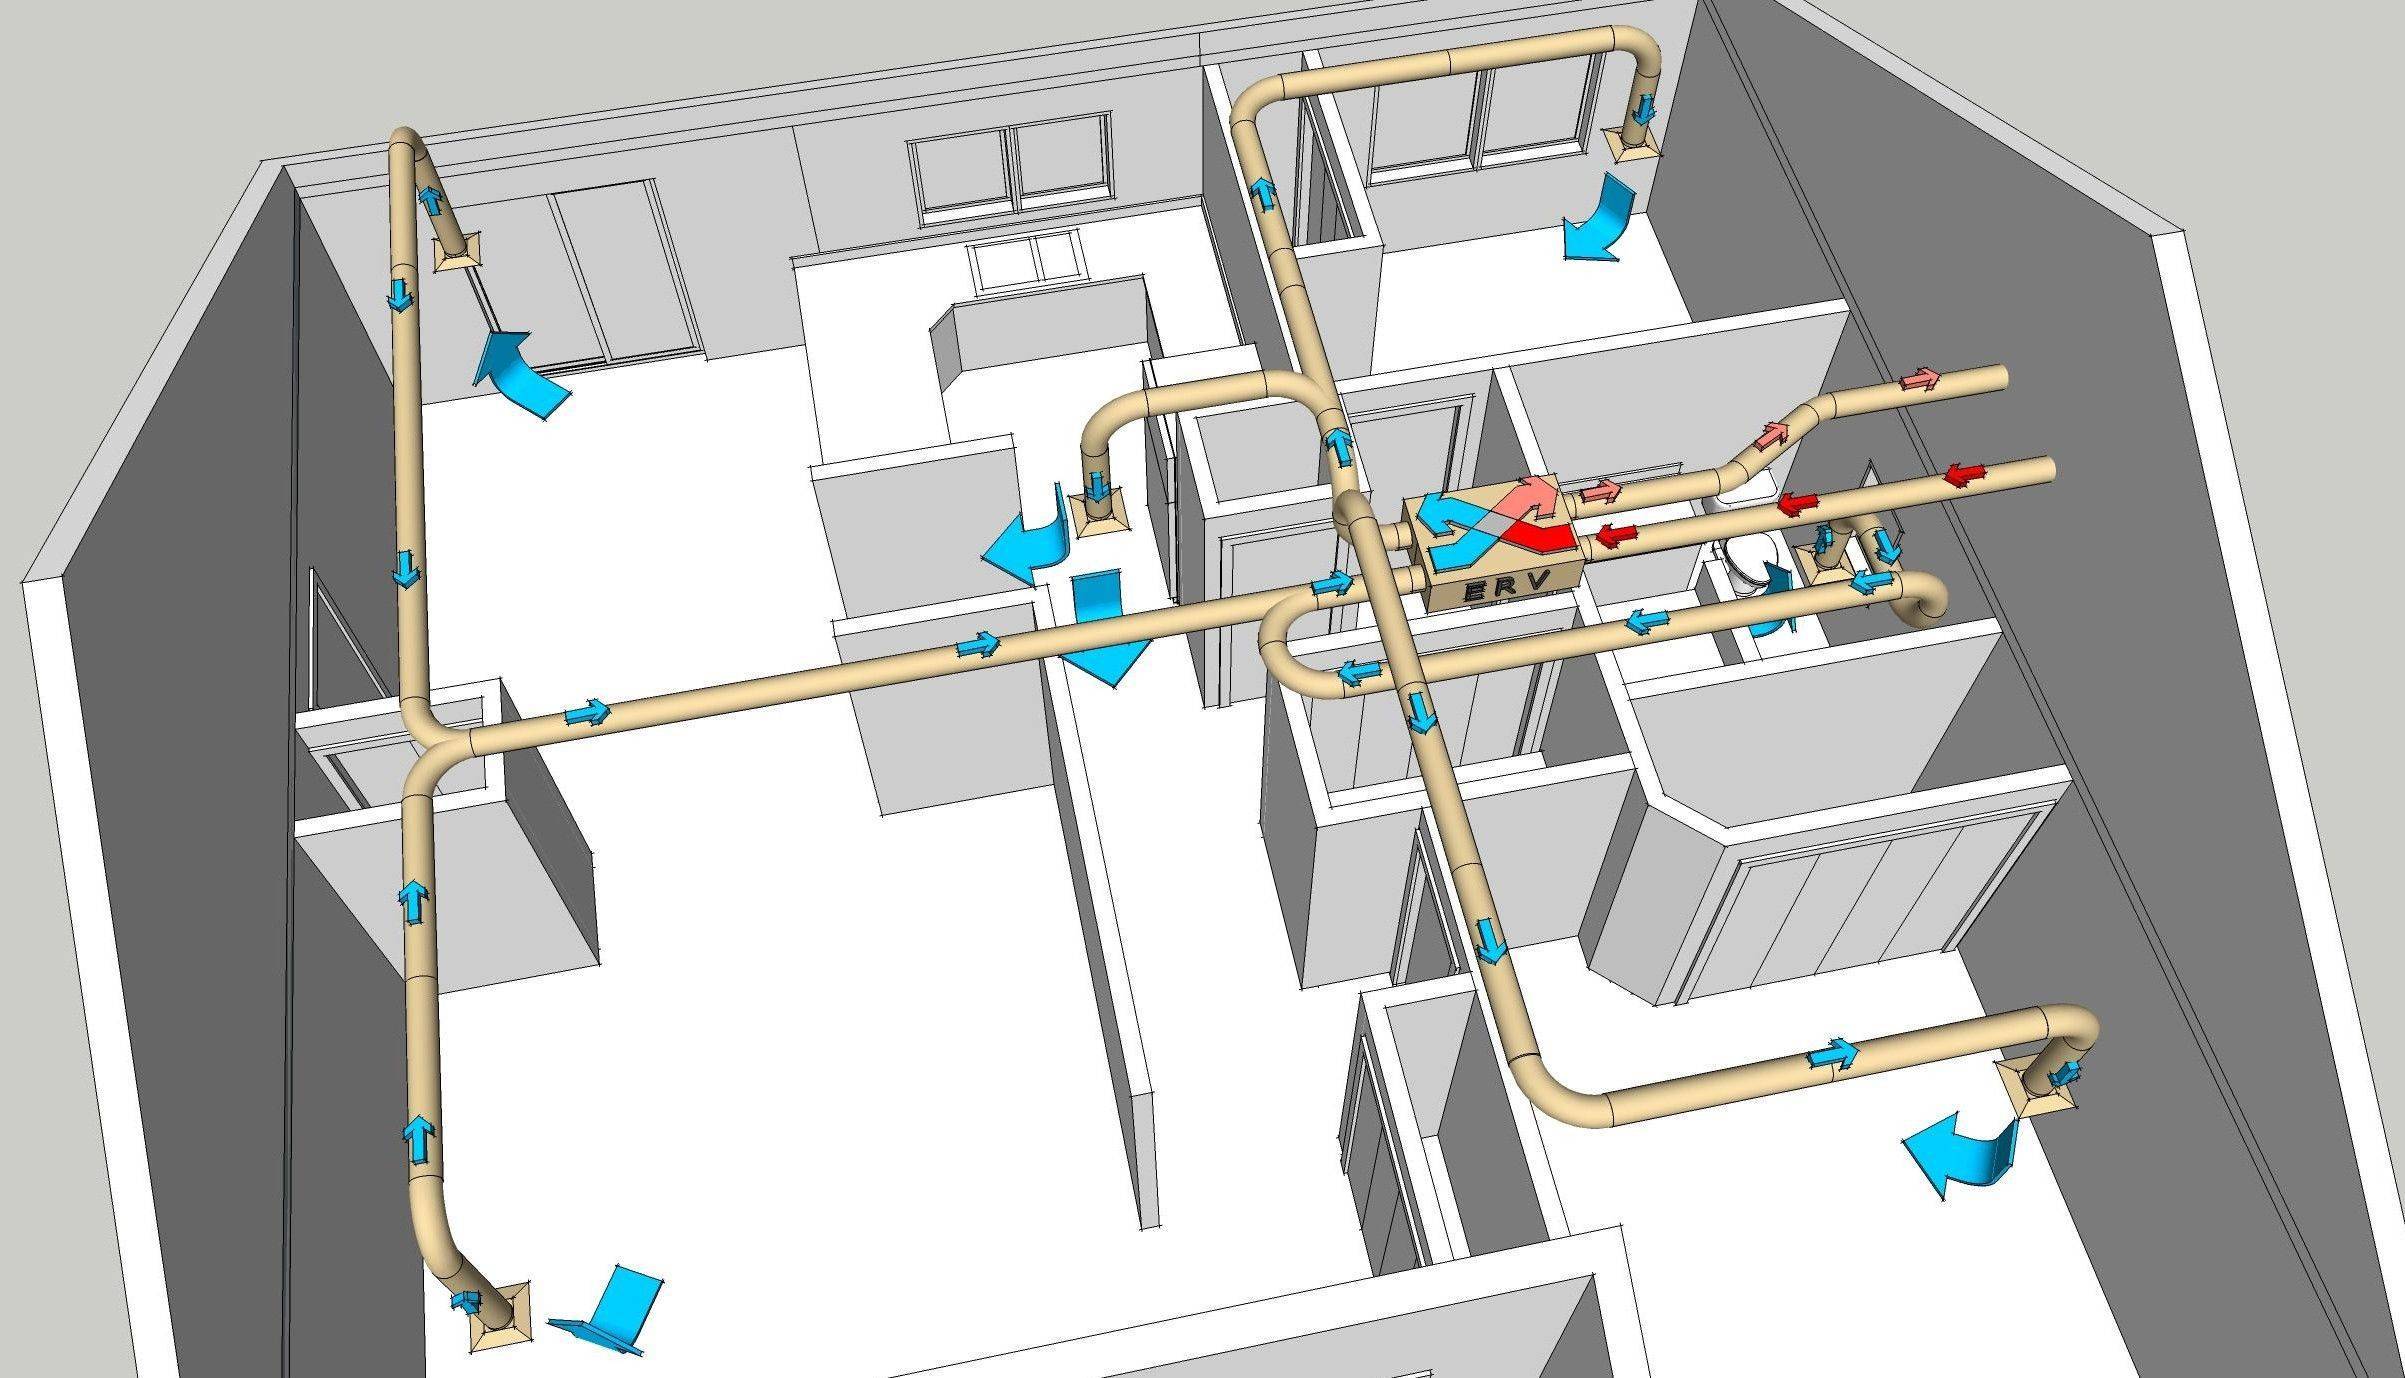 Приточная вентиляция в квартире: характеристики, разновидности, инструкция по устройству и монтажу